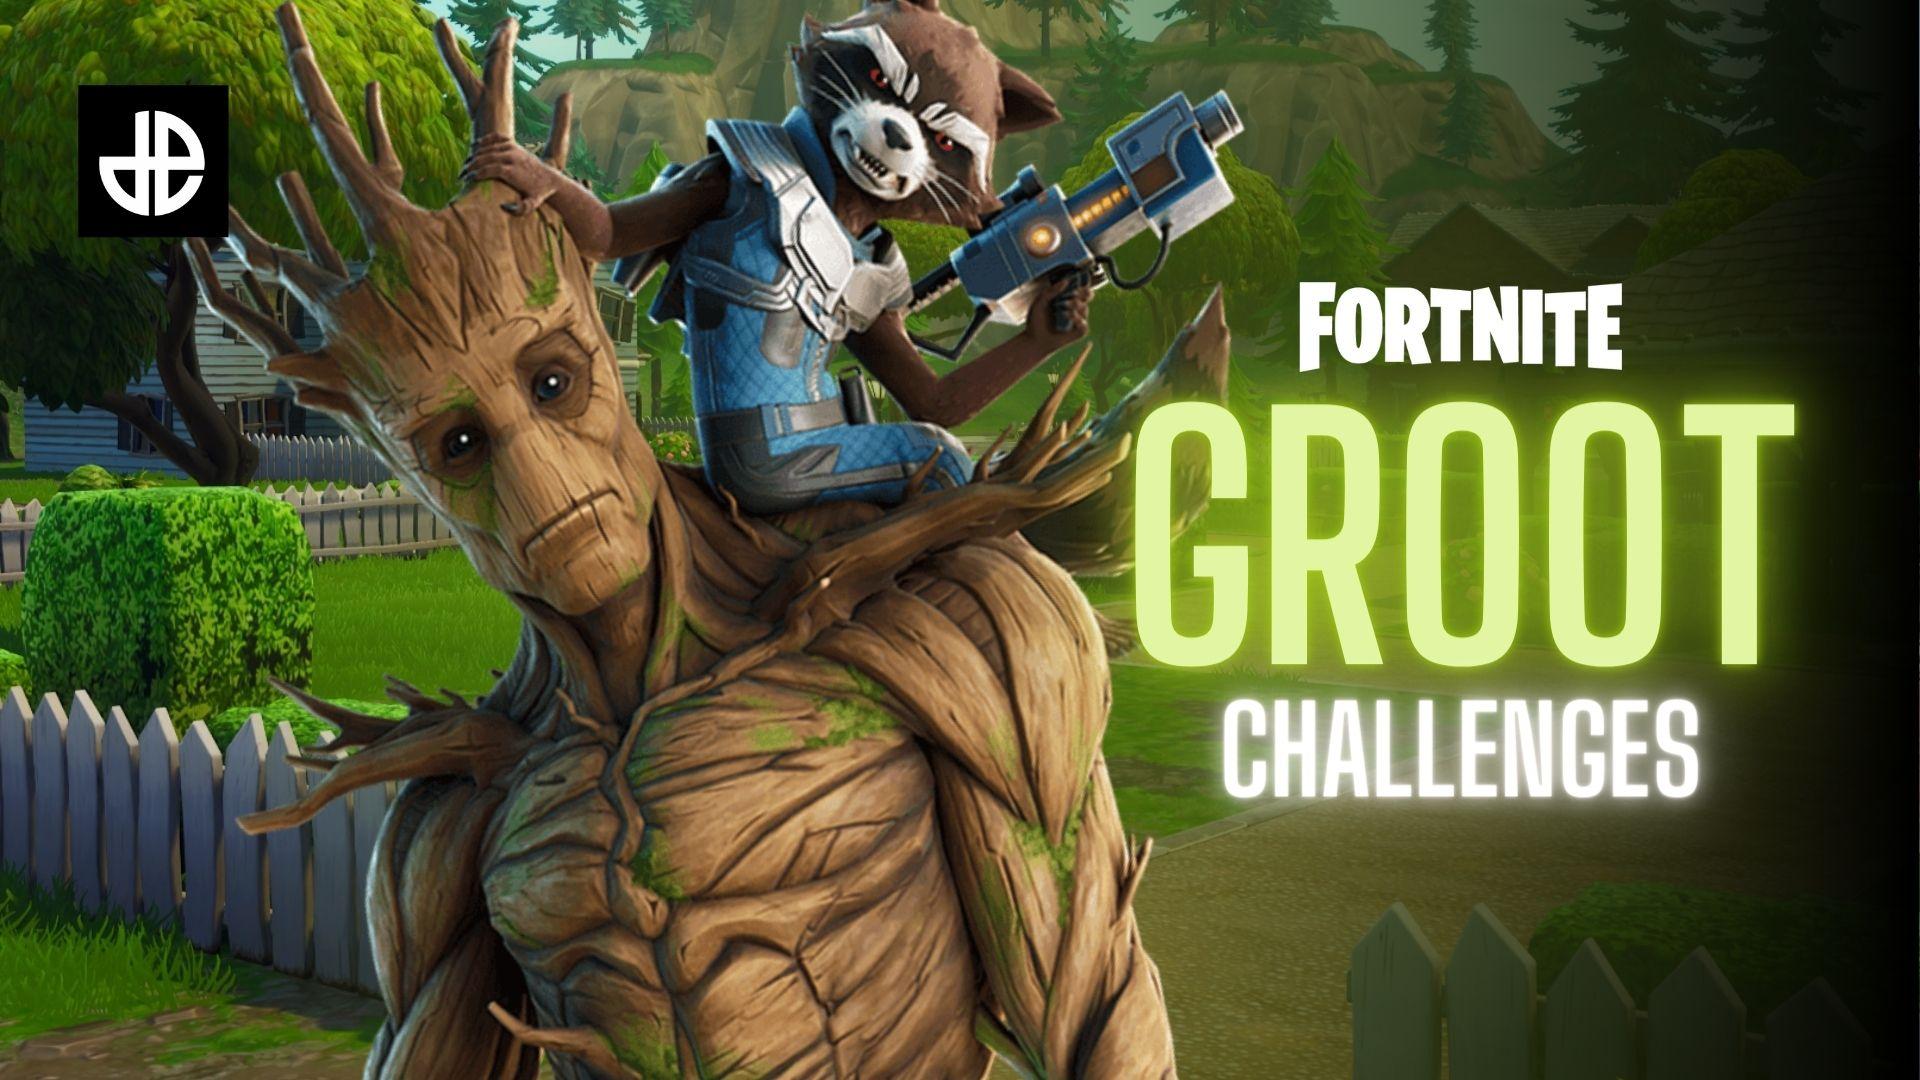 Fortnite Groot challenges